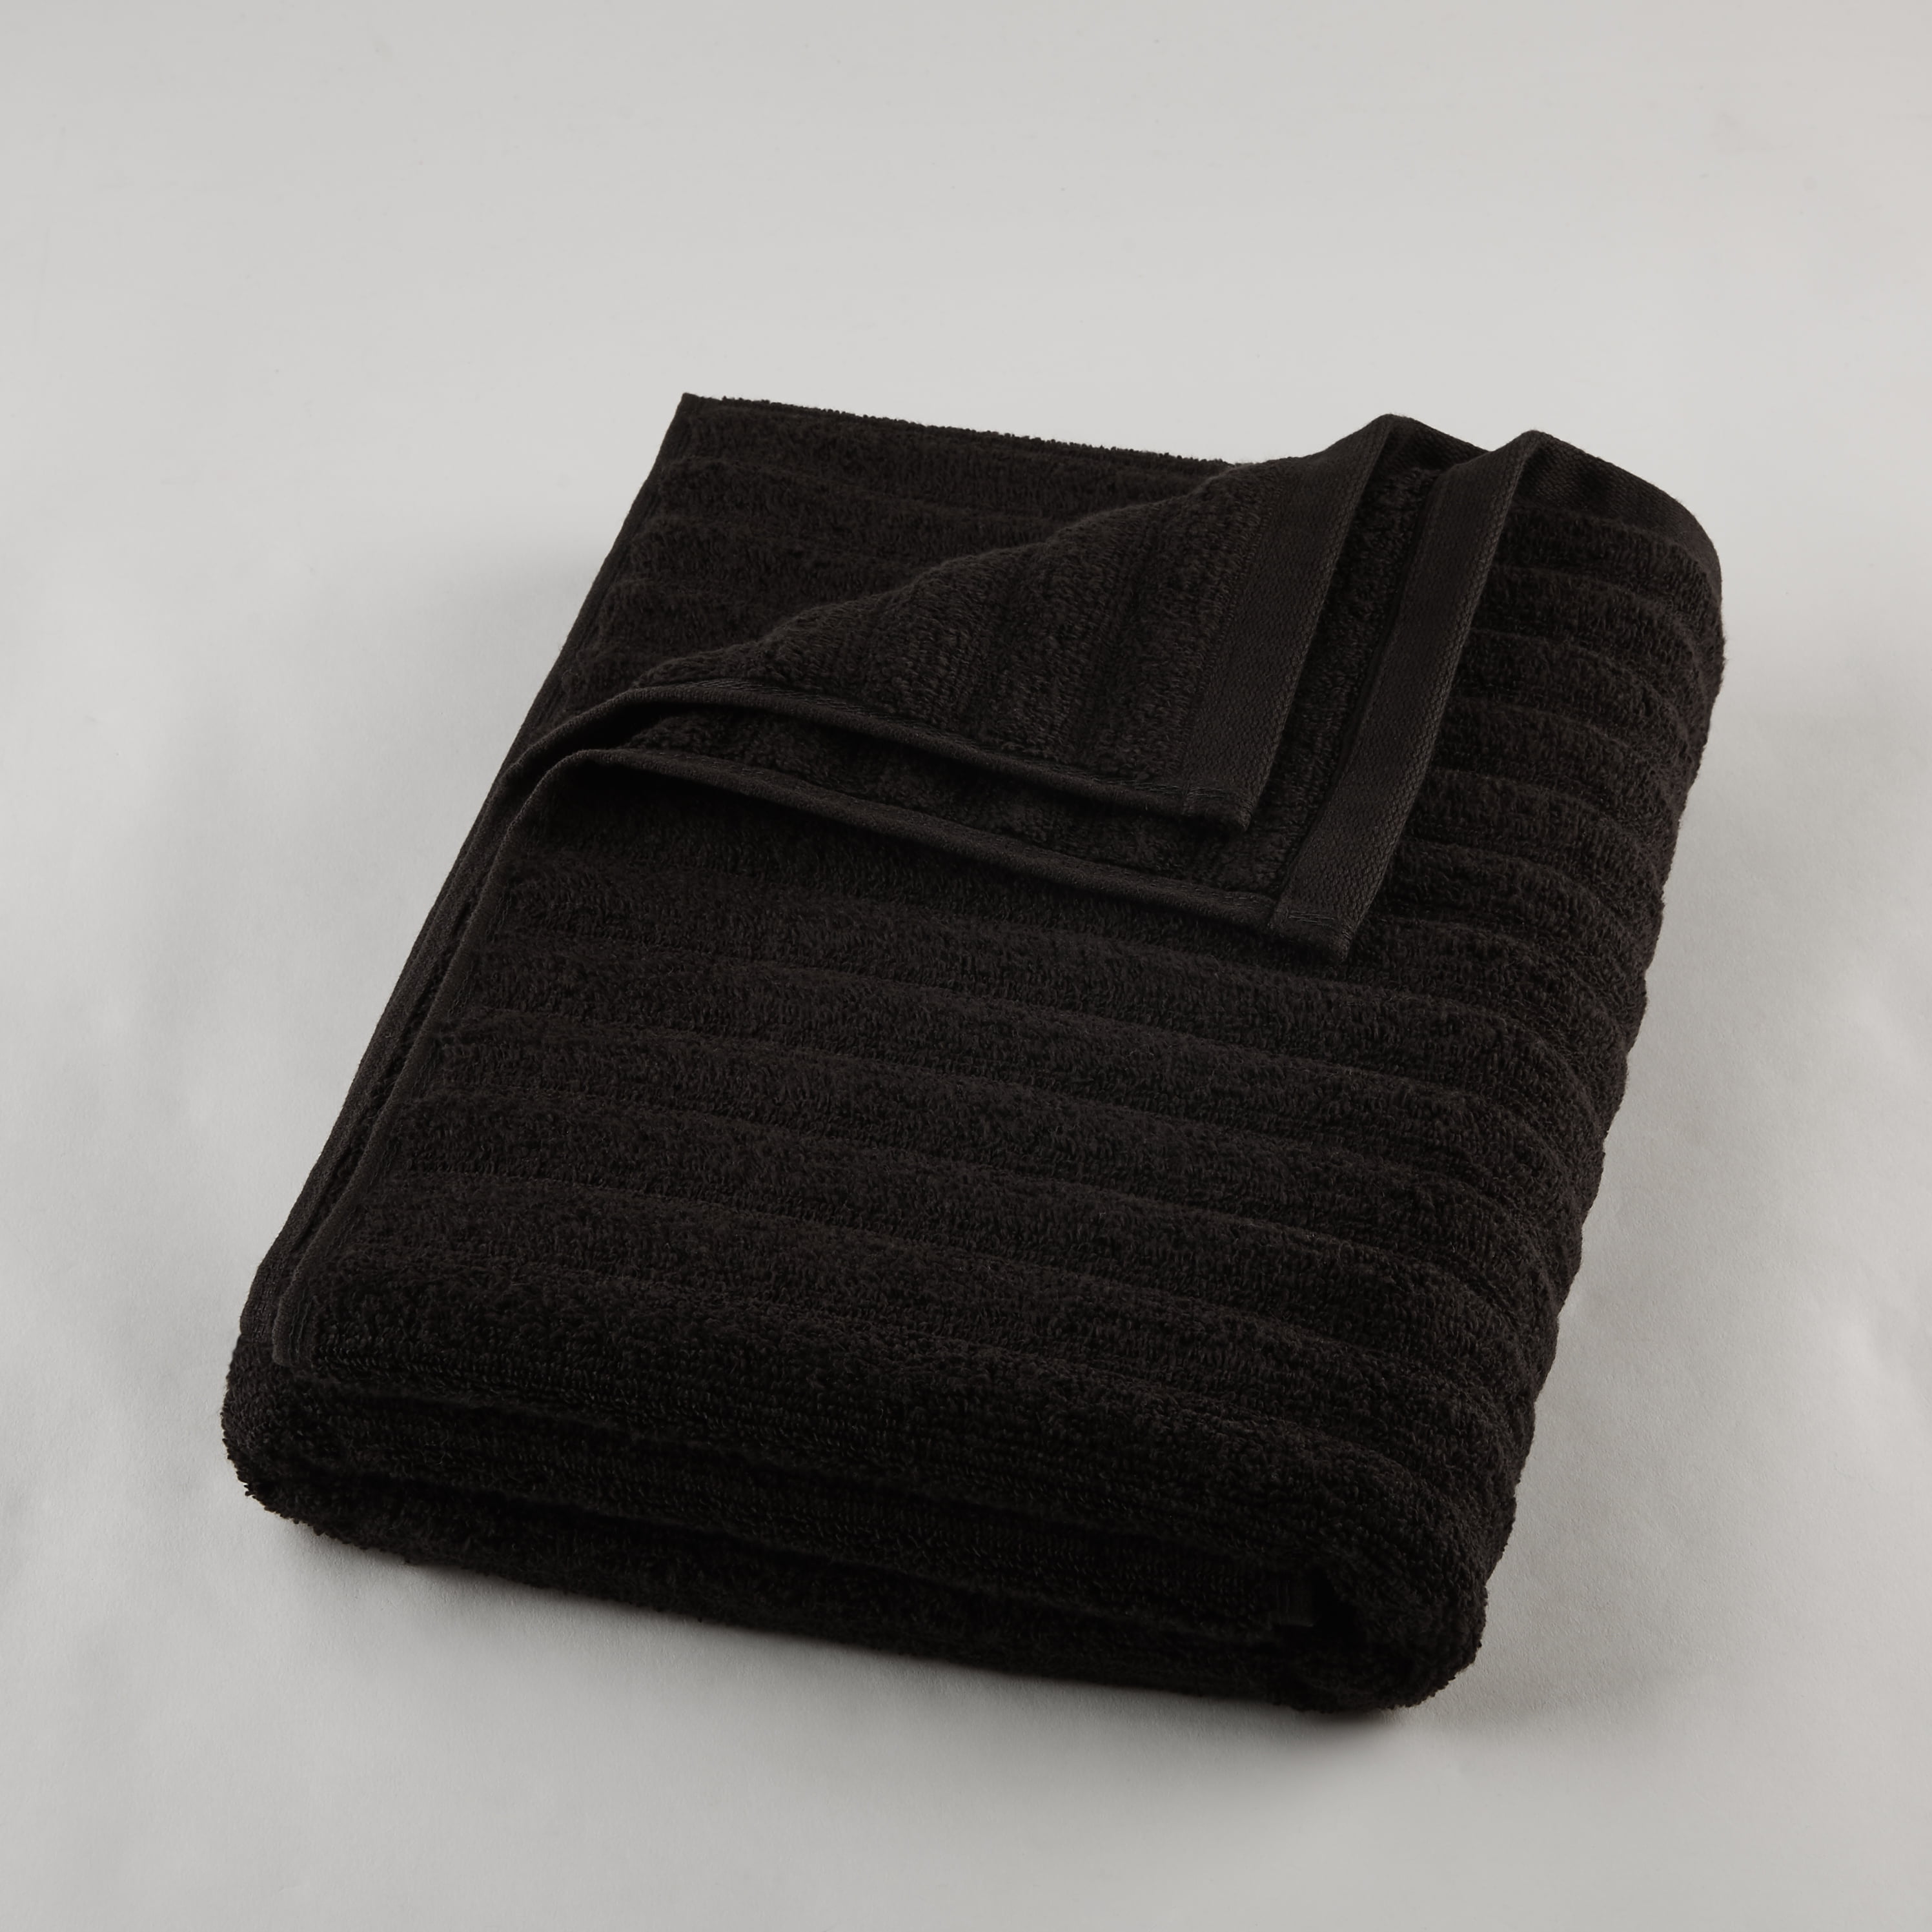 Mainstays Performance Textured Bath Towel Rich Black Walmart Com